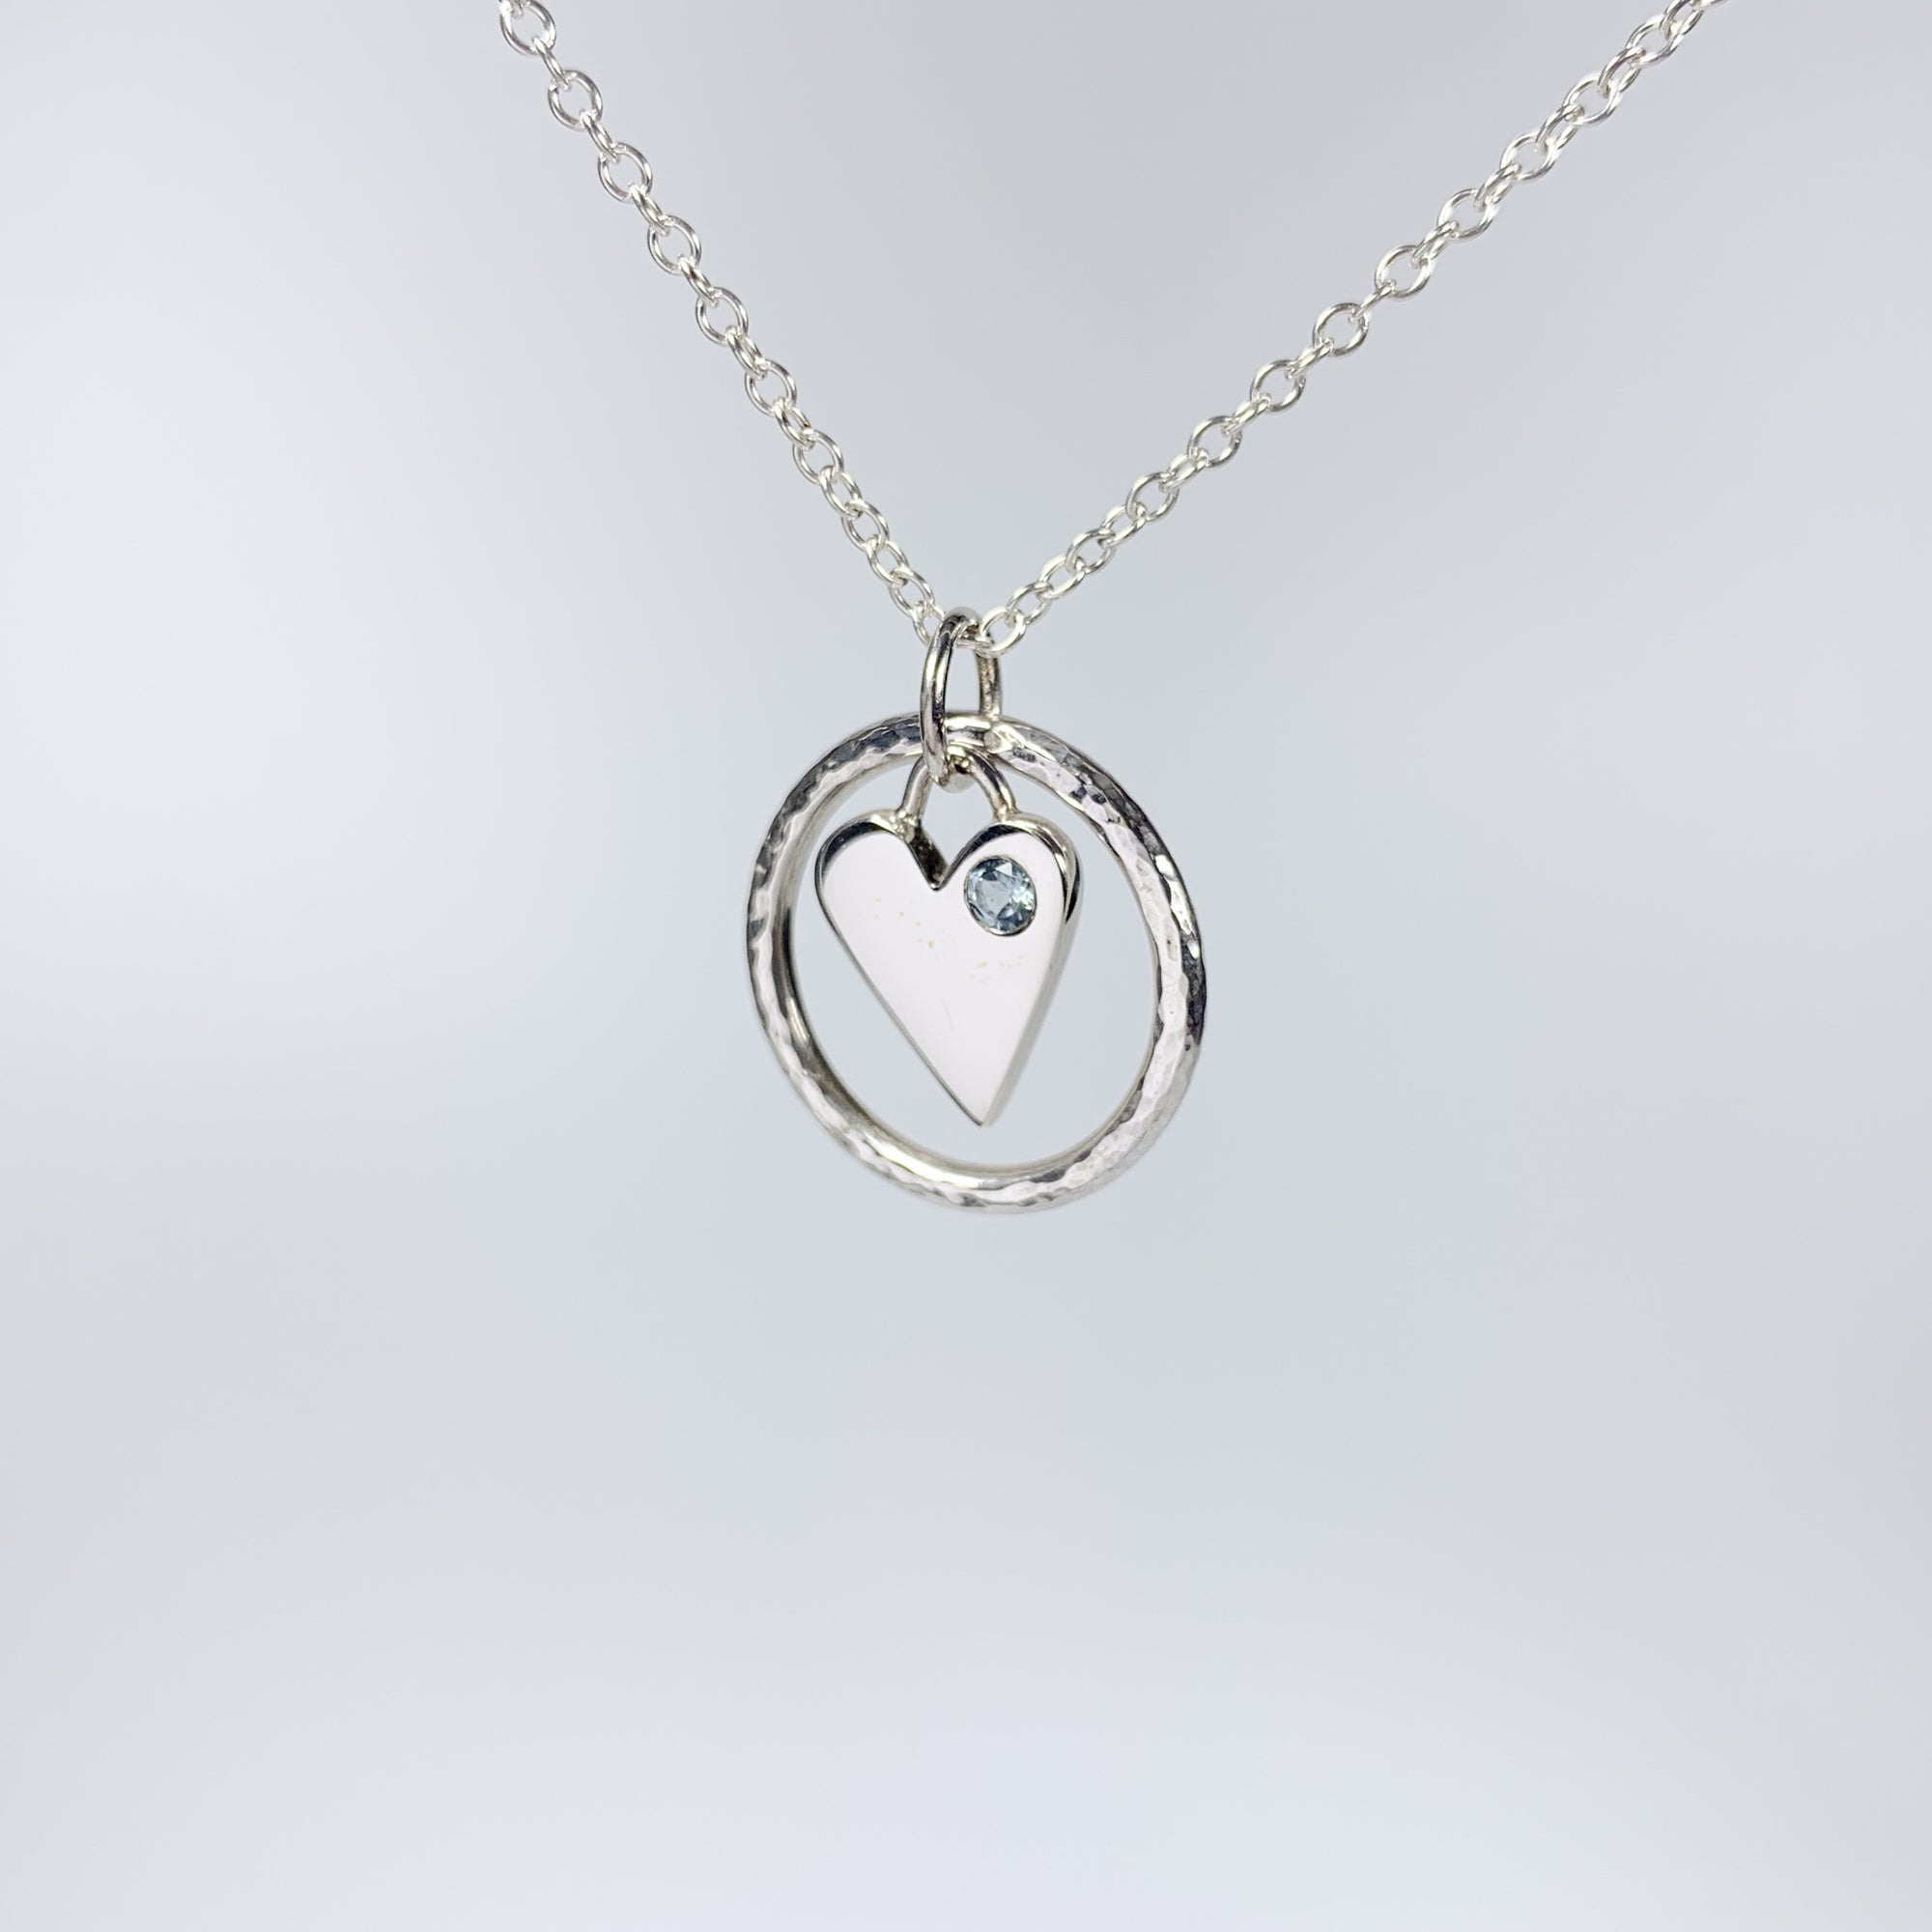 Caldera Amor Sky Blue Topaz Heart Pendant Necklace